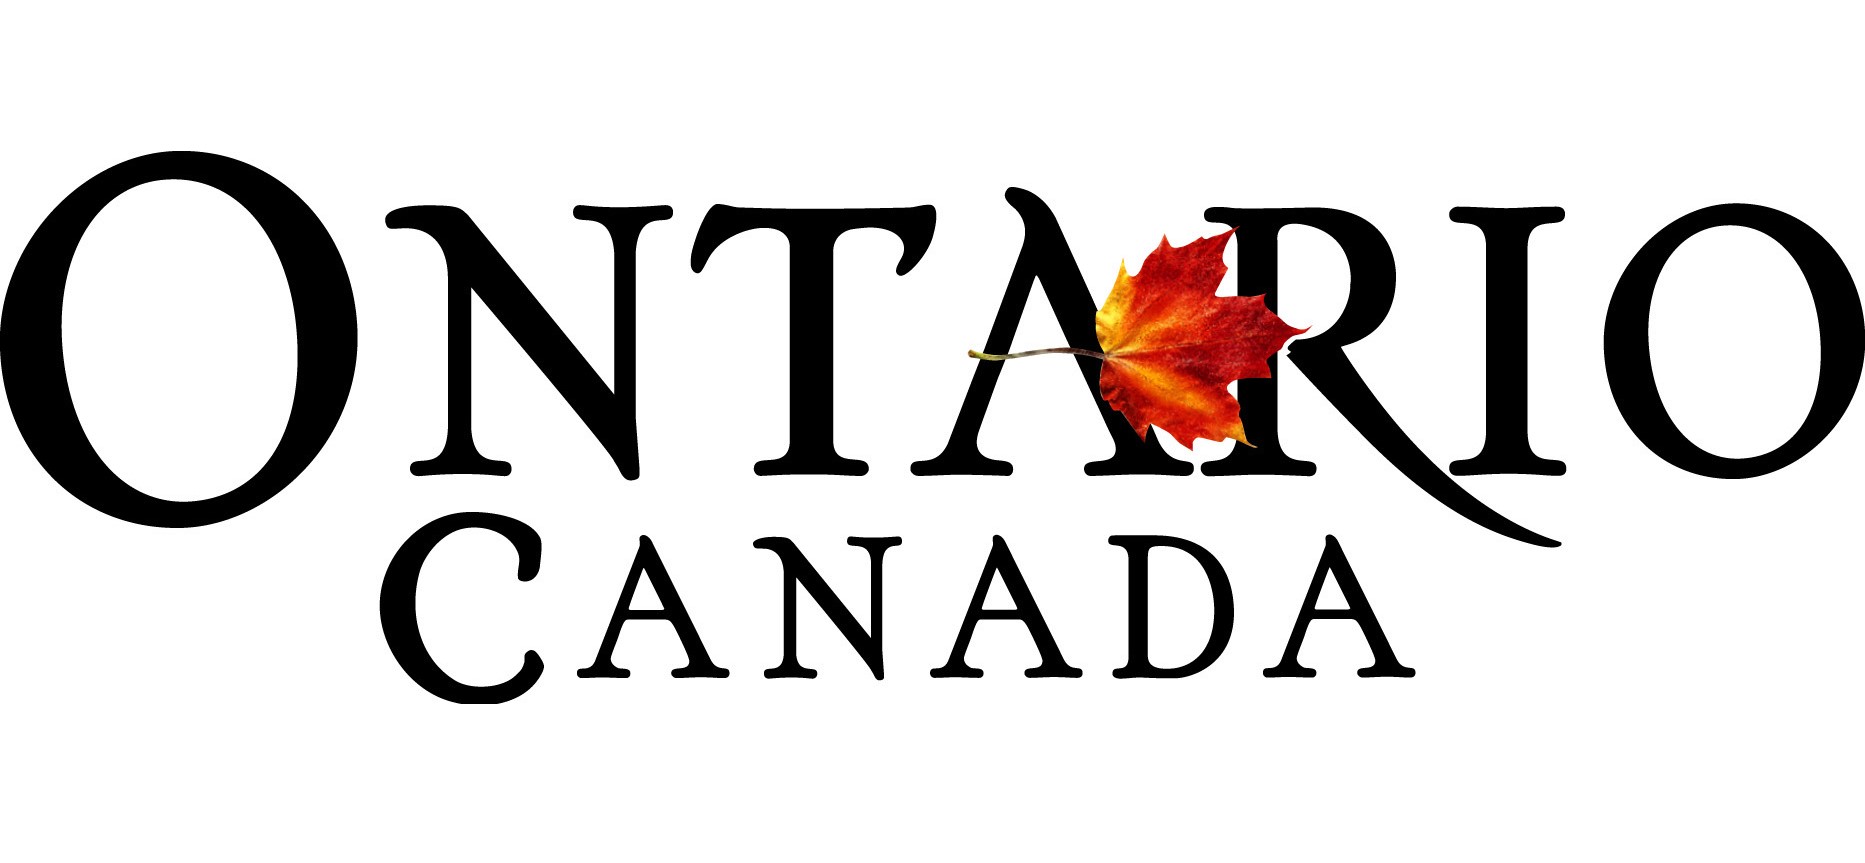 sponsor Ontario Canada